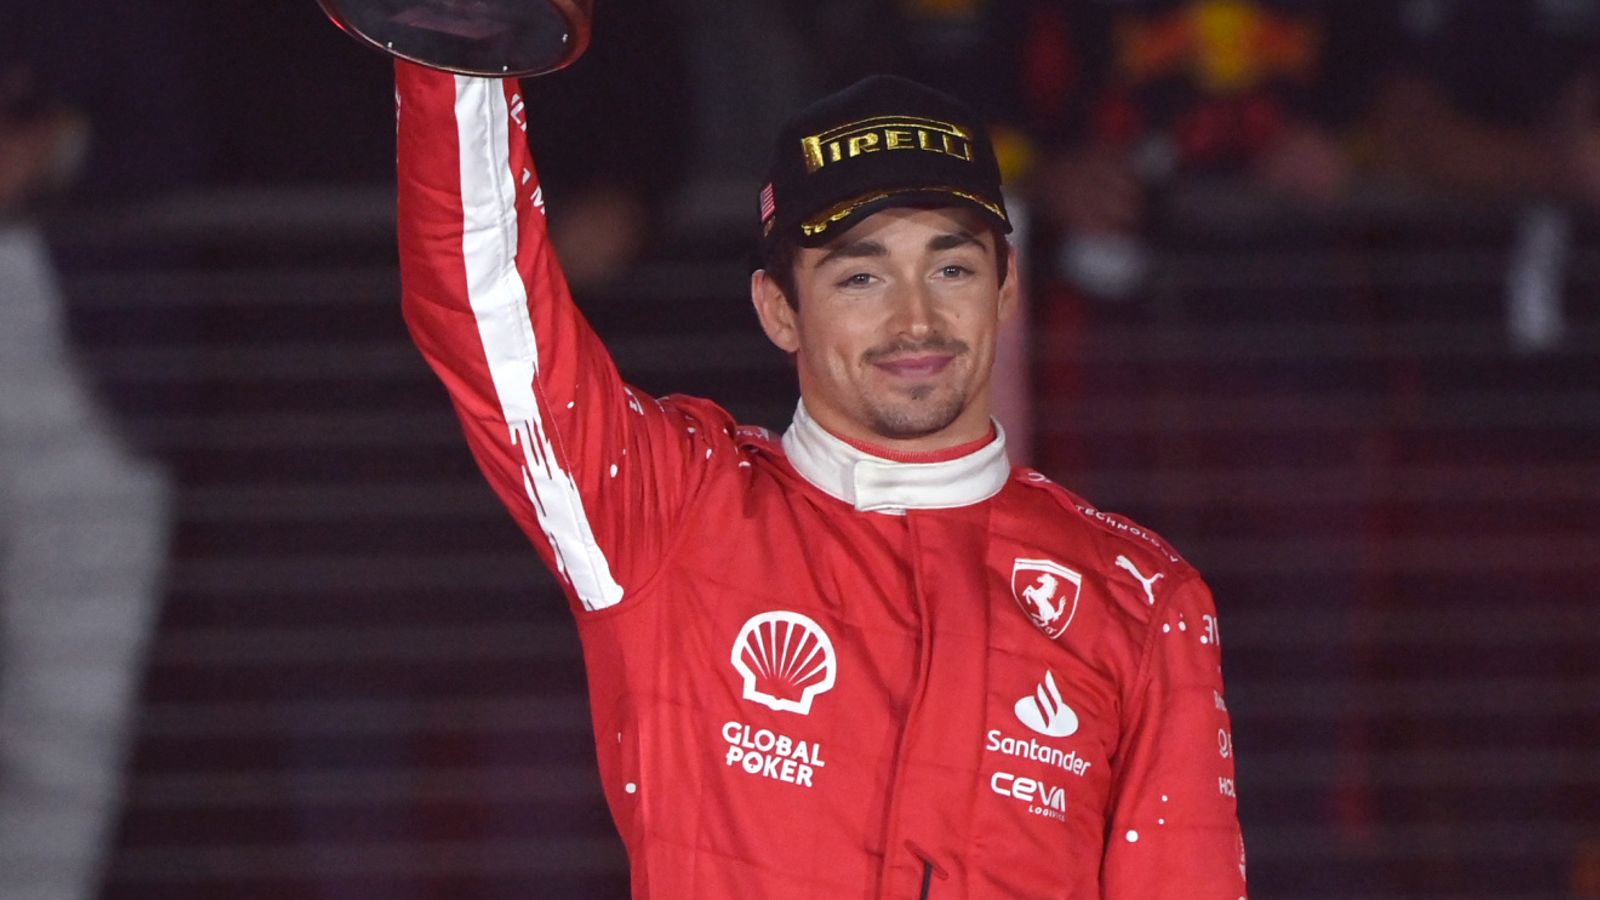 Charles Leclerc, Ferrari driver, Statistics and news